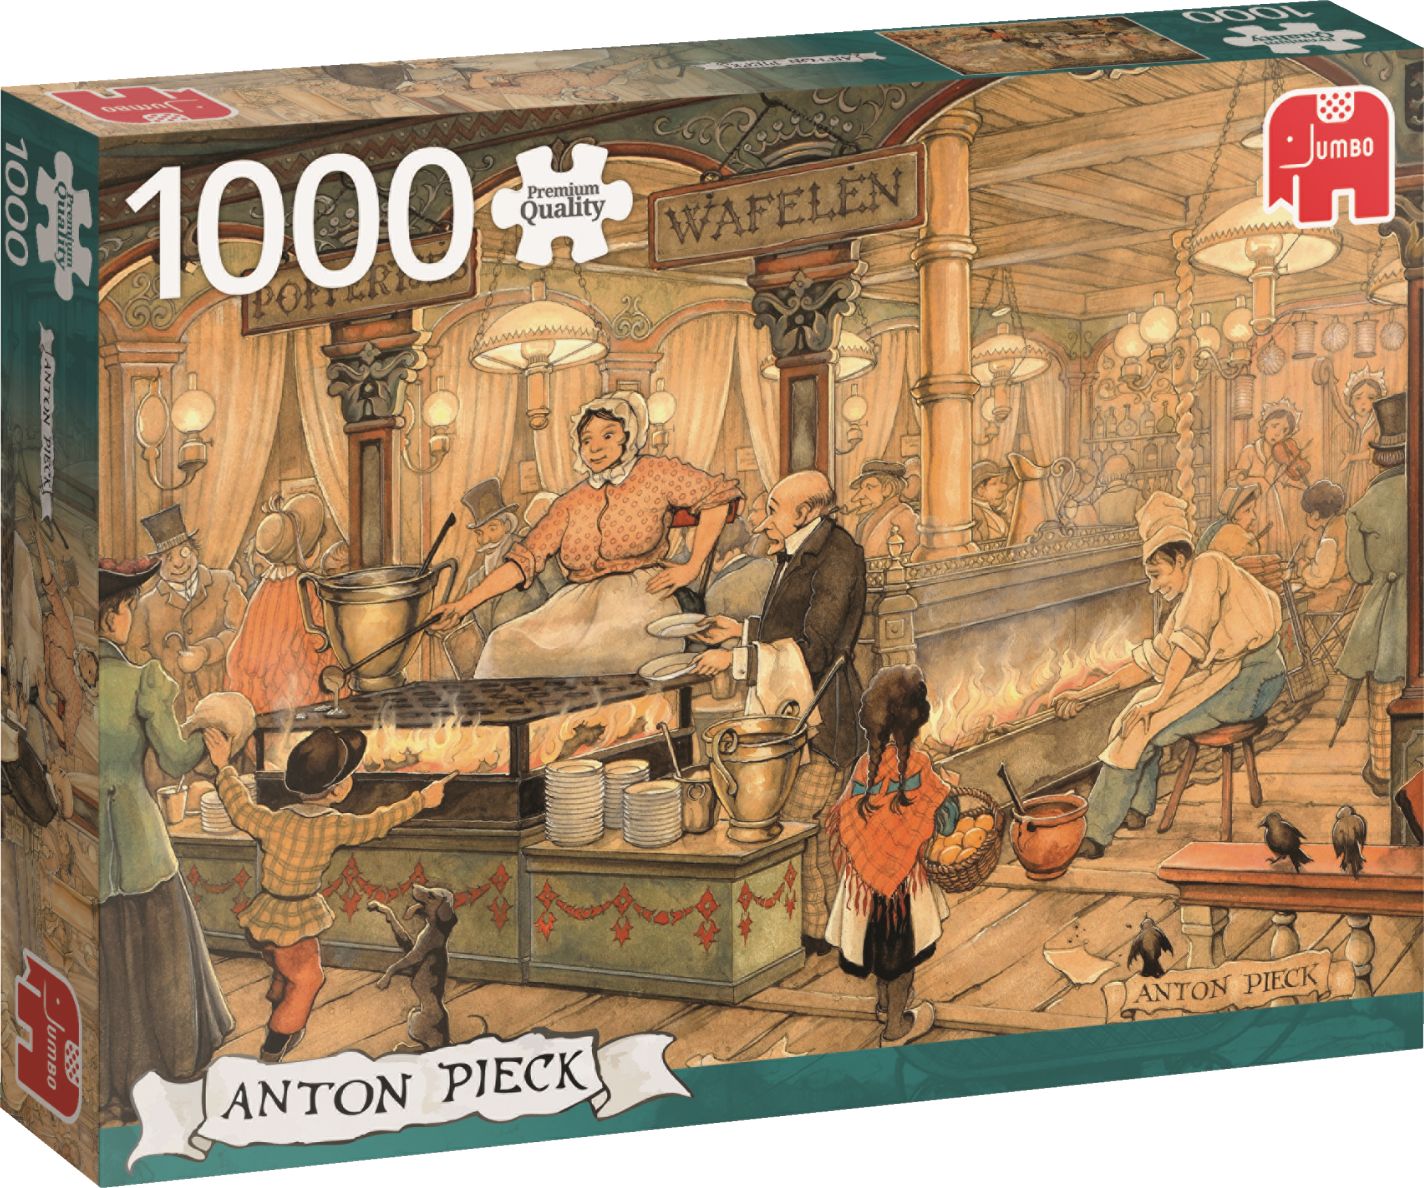 Jumbo Anton Pieck Poffertjeskraam puzzel - 1000 stukjes - HelloWe - are here for you